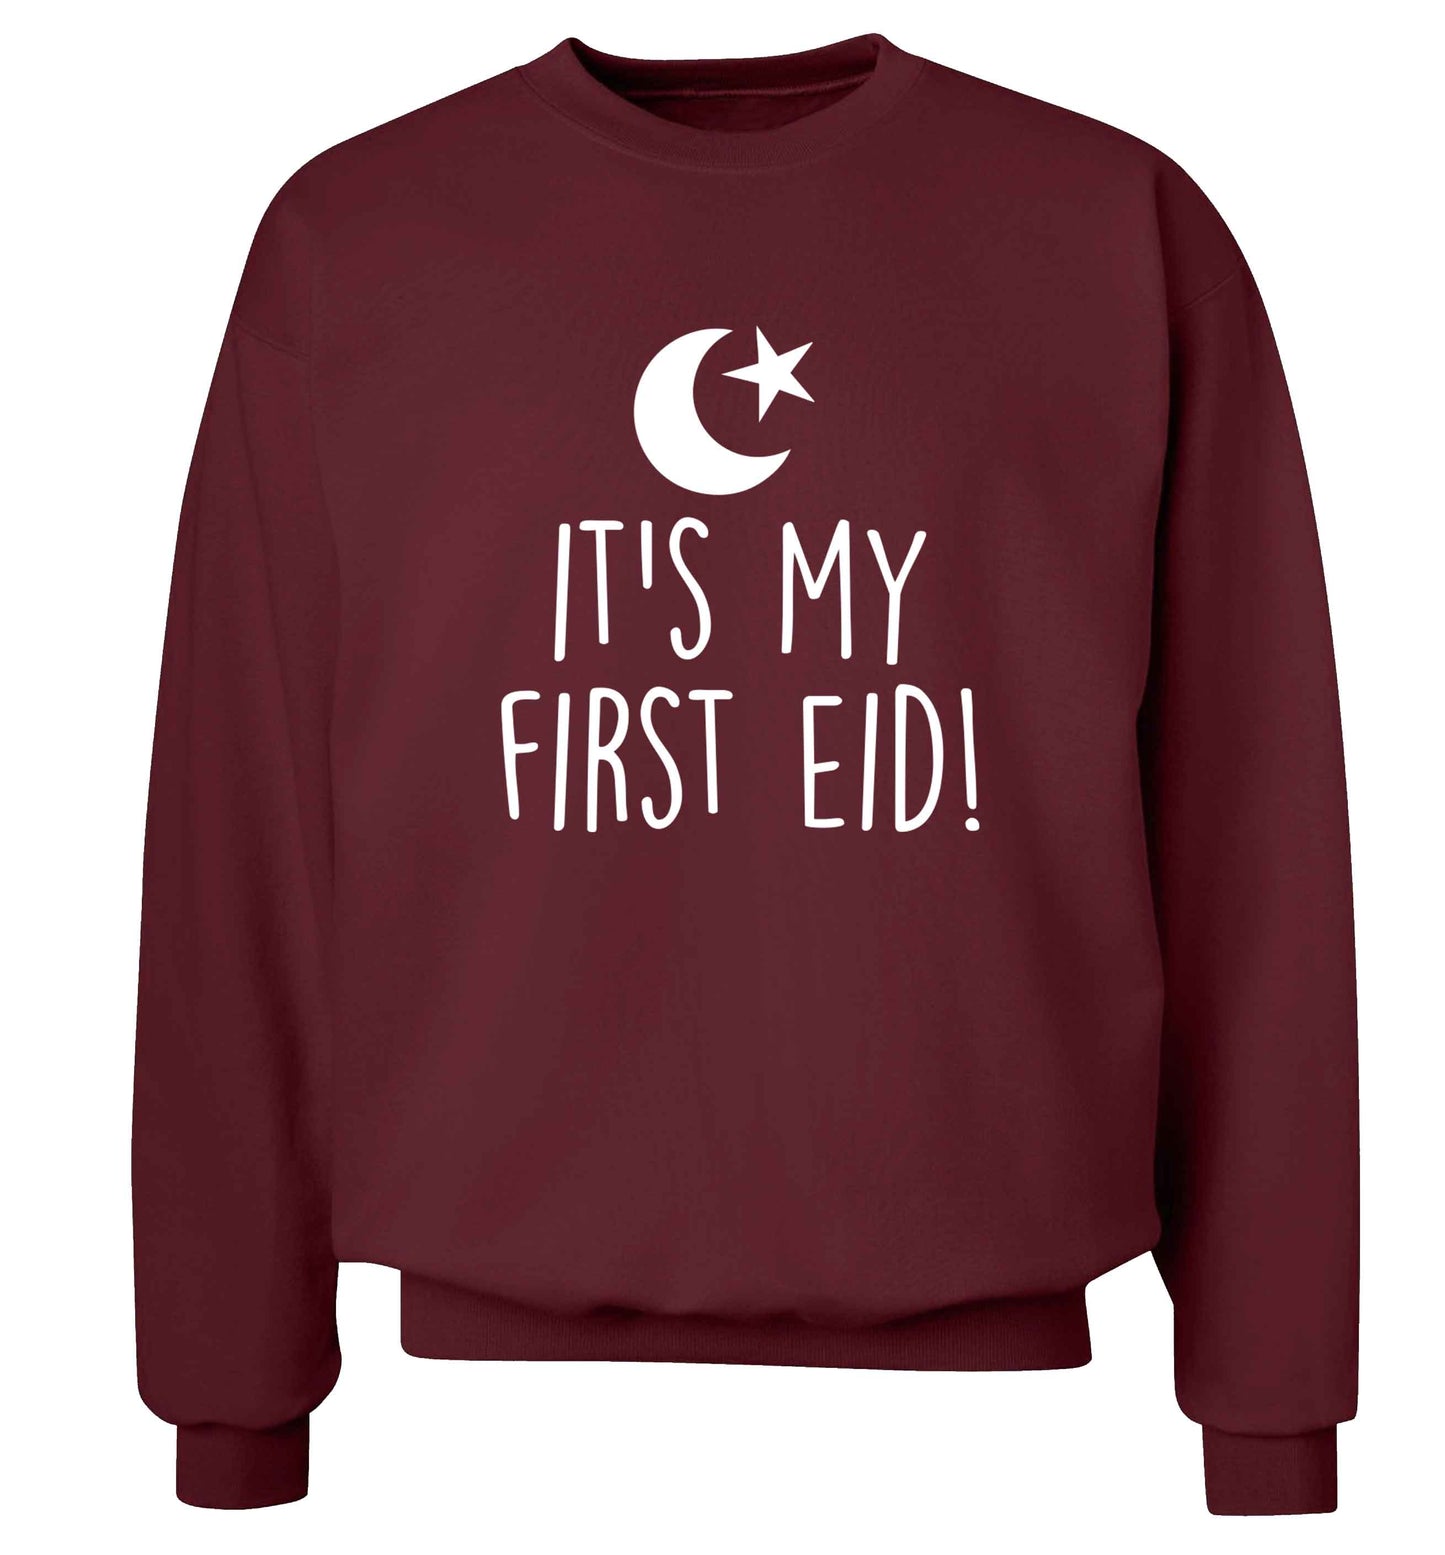 It's my first Eid adult's unisex maroon sweater 2XL